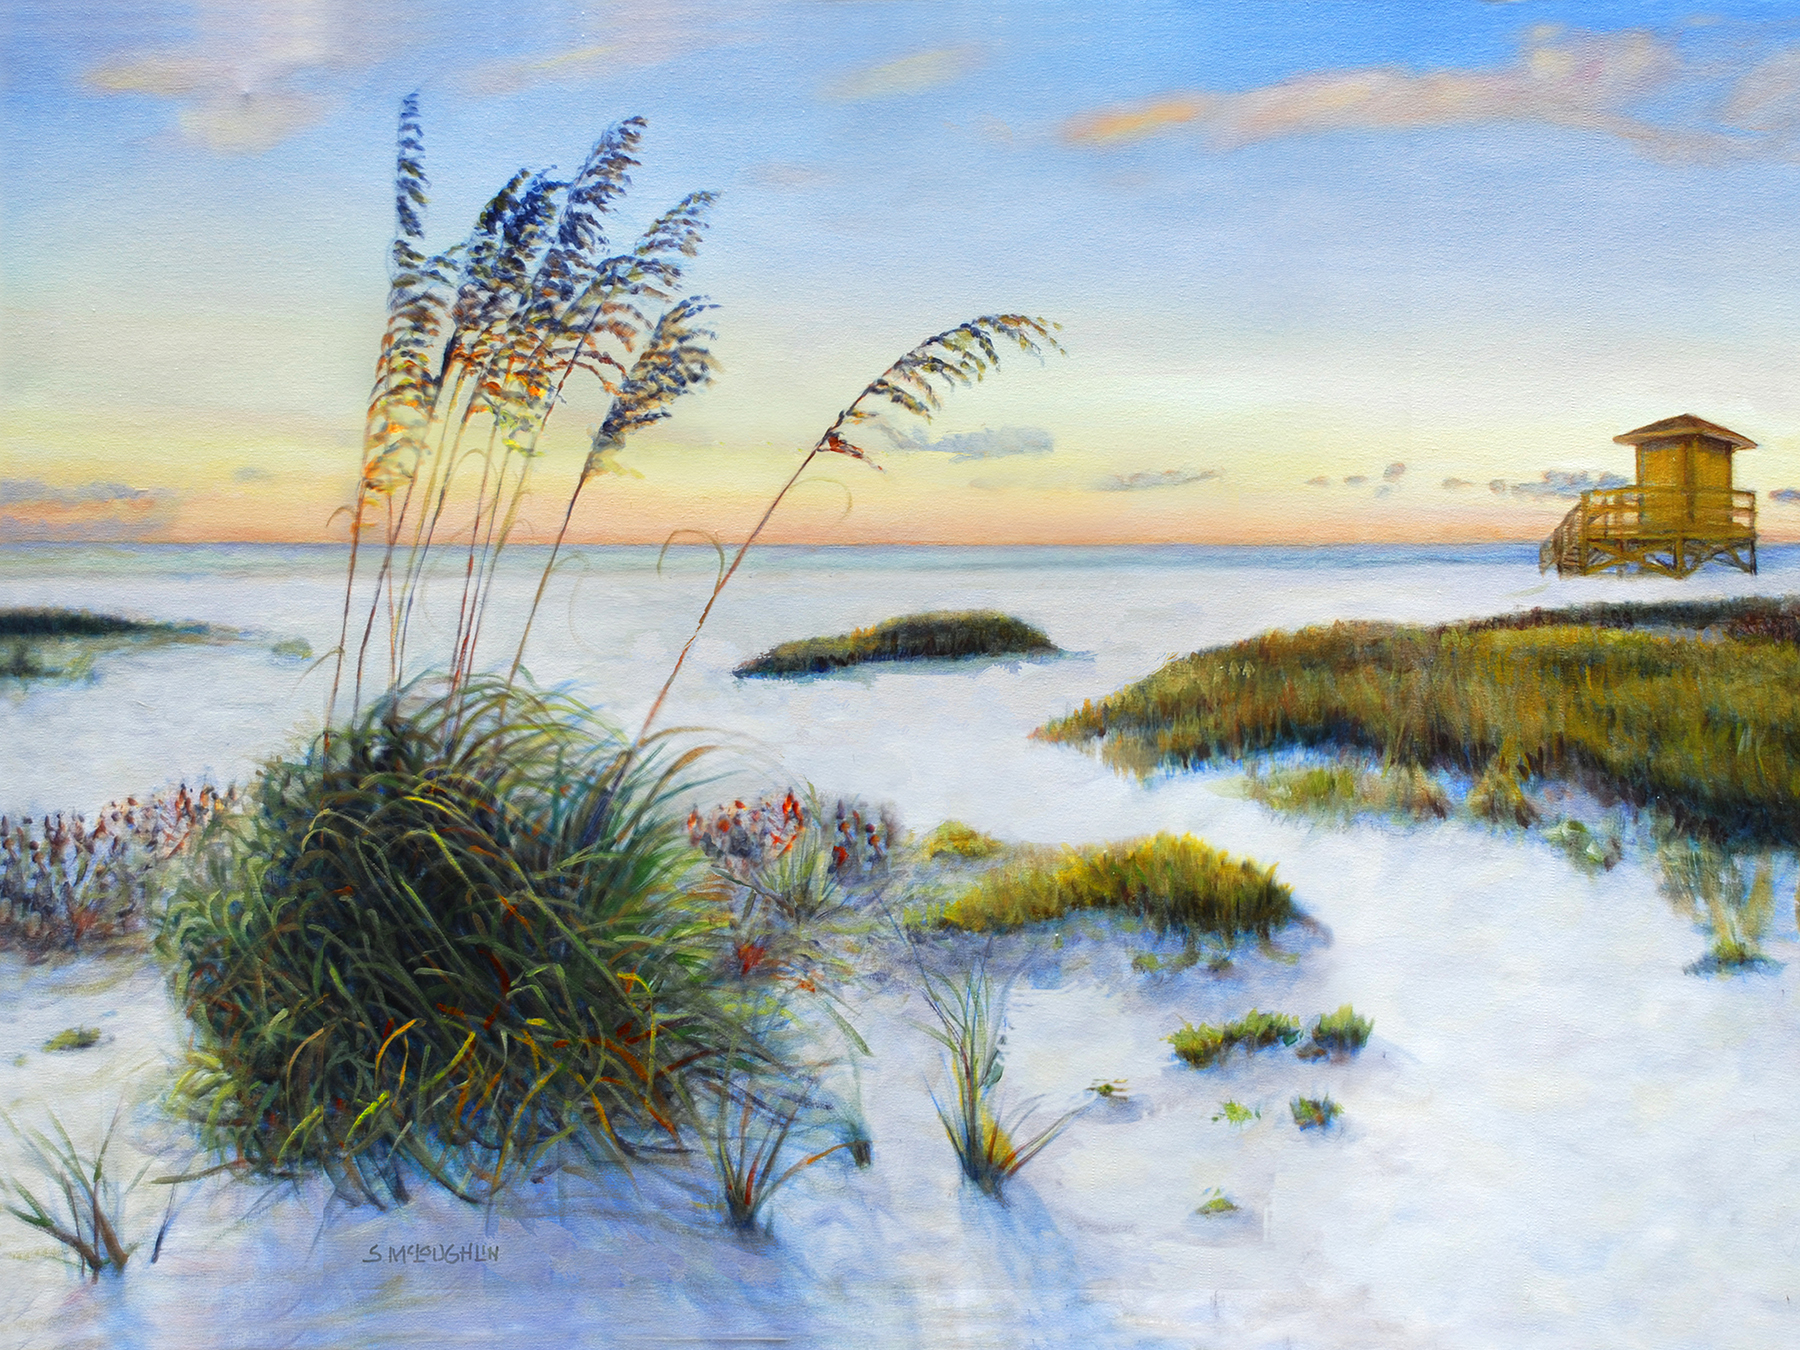 Shawn McLoughlin often paints scenes from Siesta Key beaches. Photo courtesy